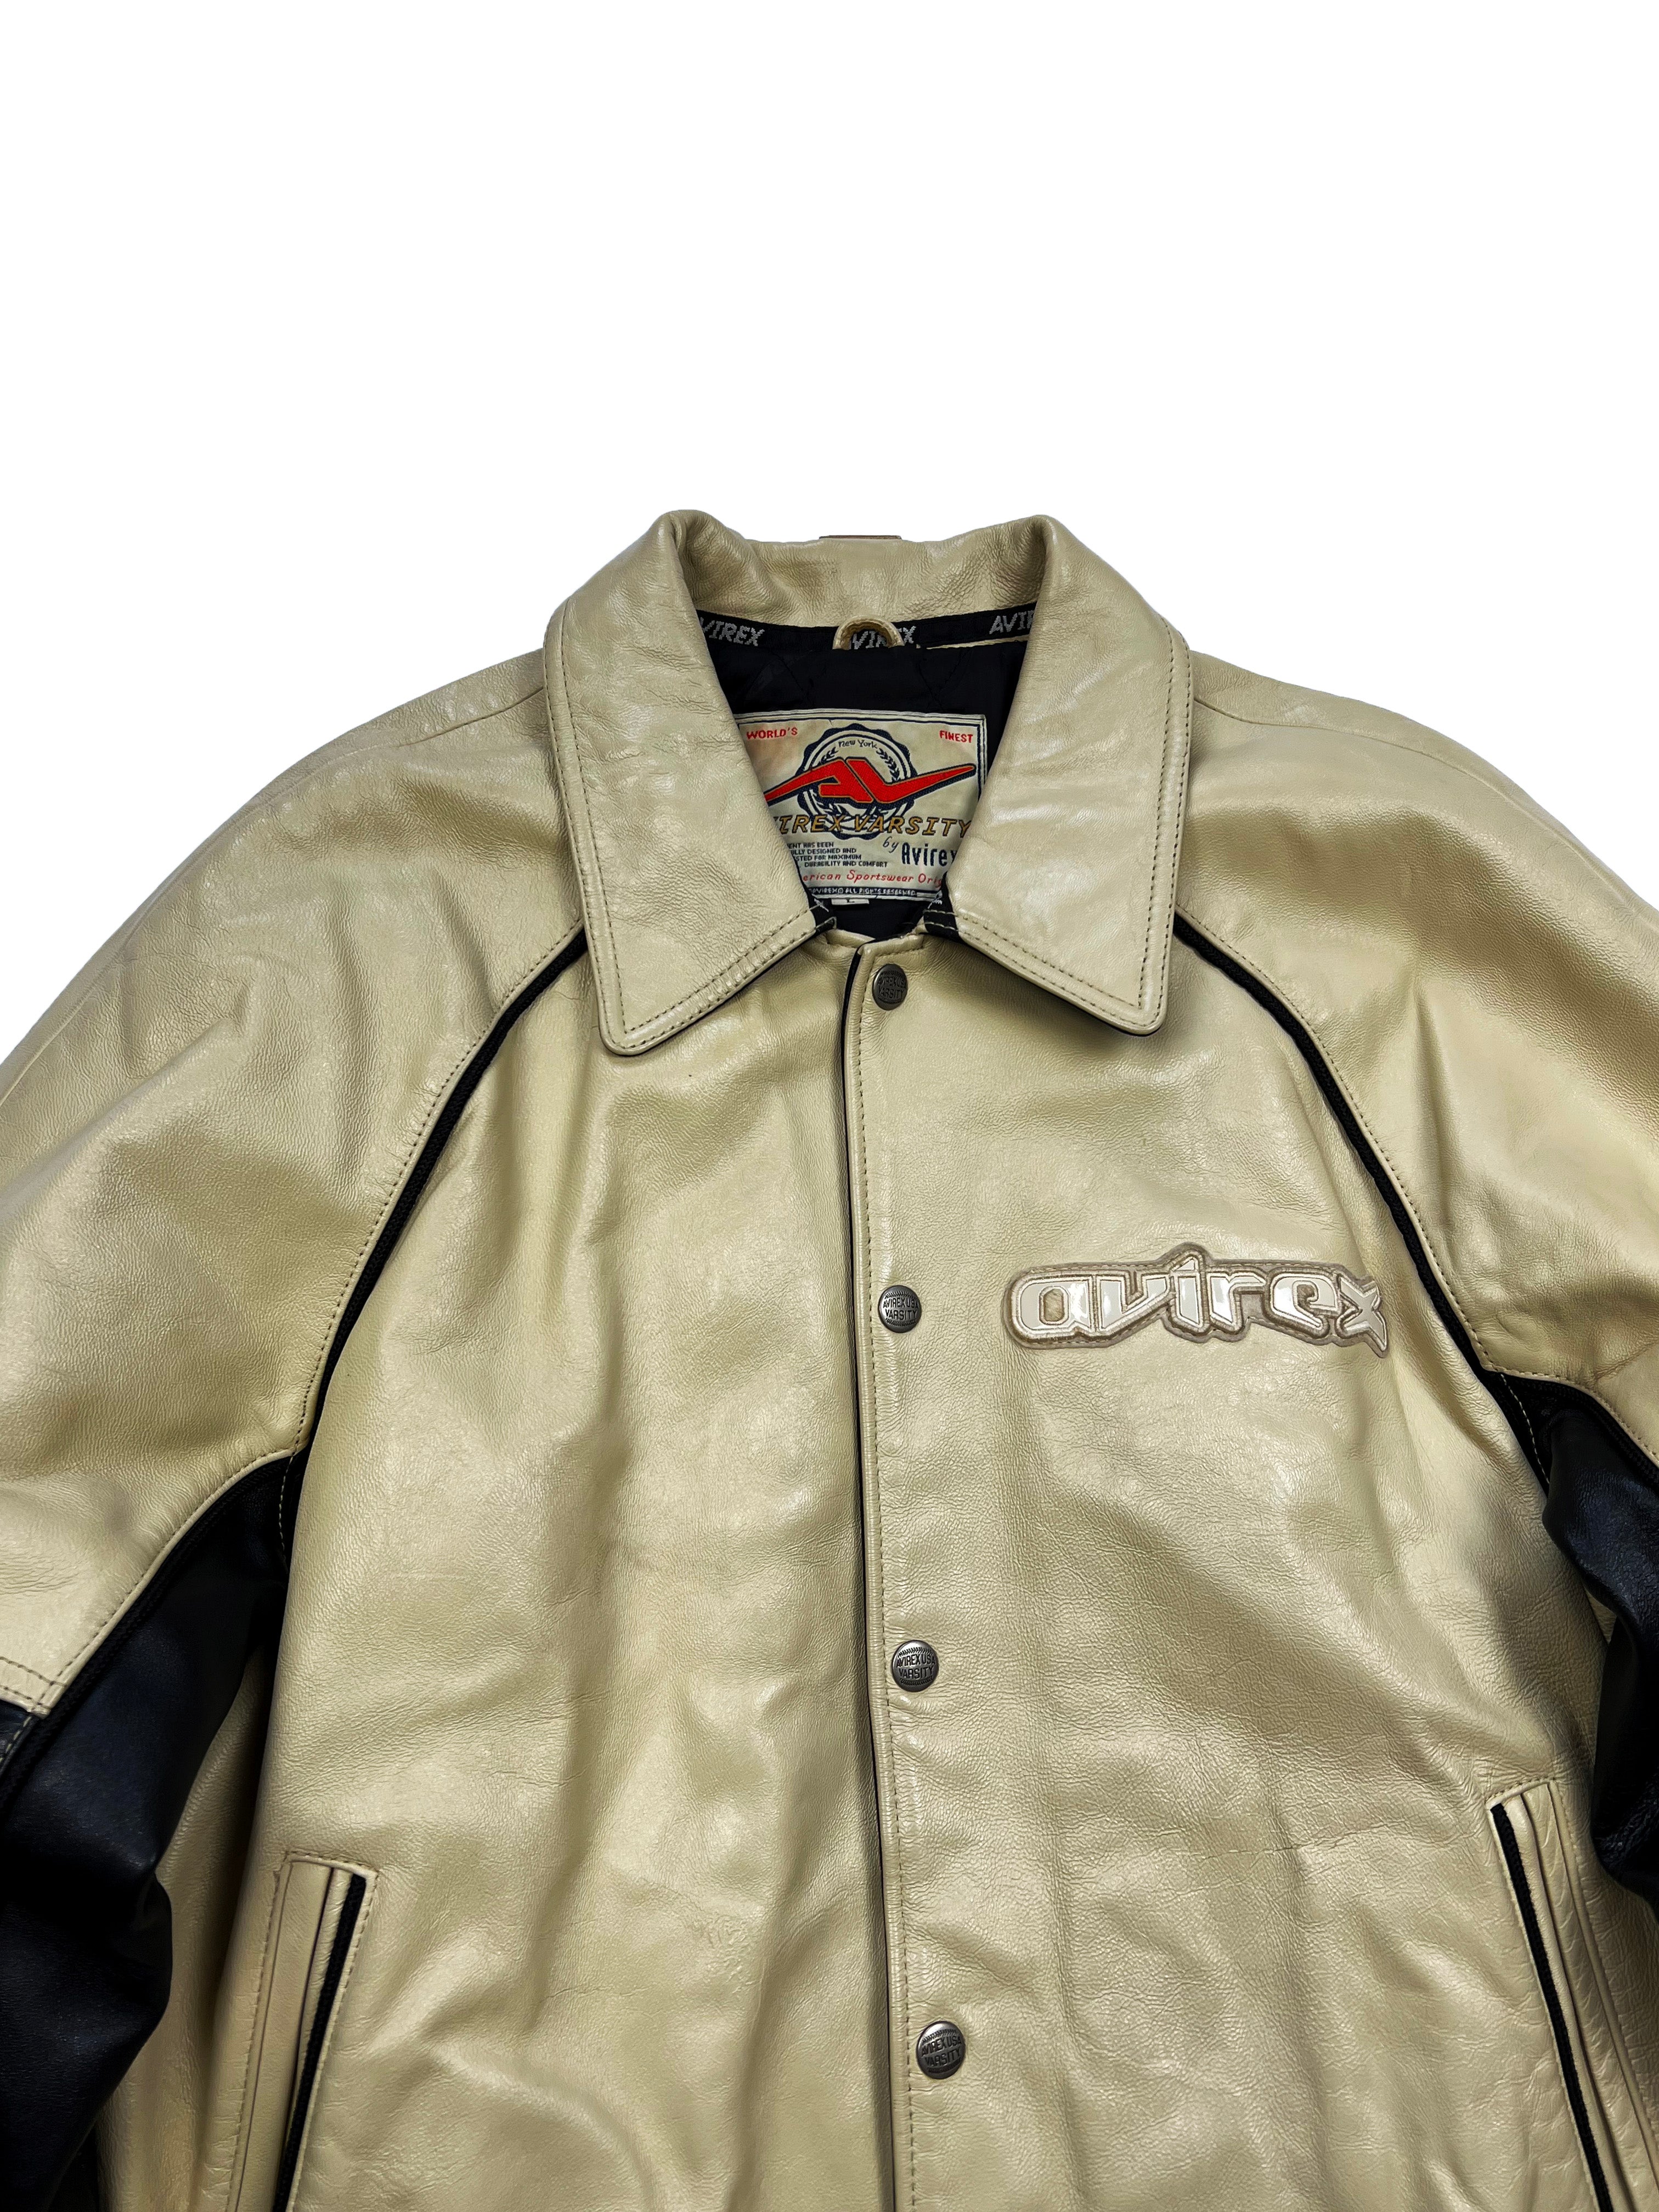 Avirex Olive Dragon Leather Jacket 90's